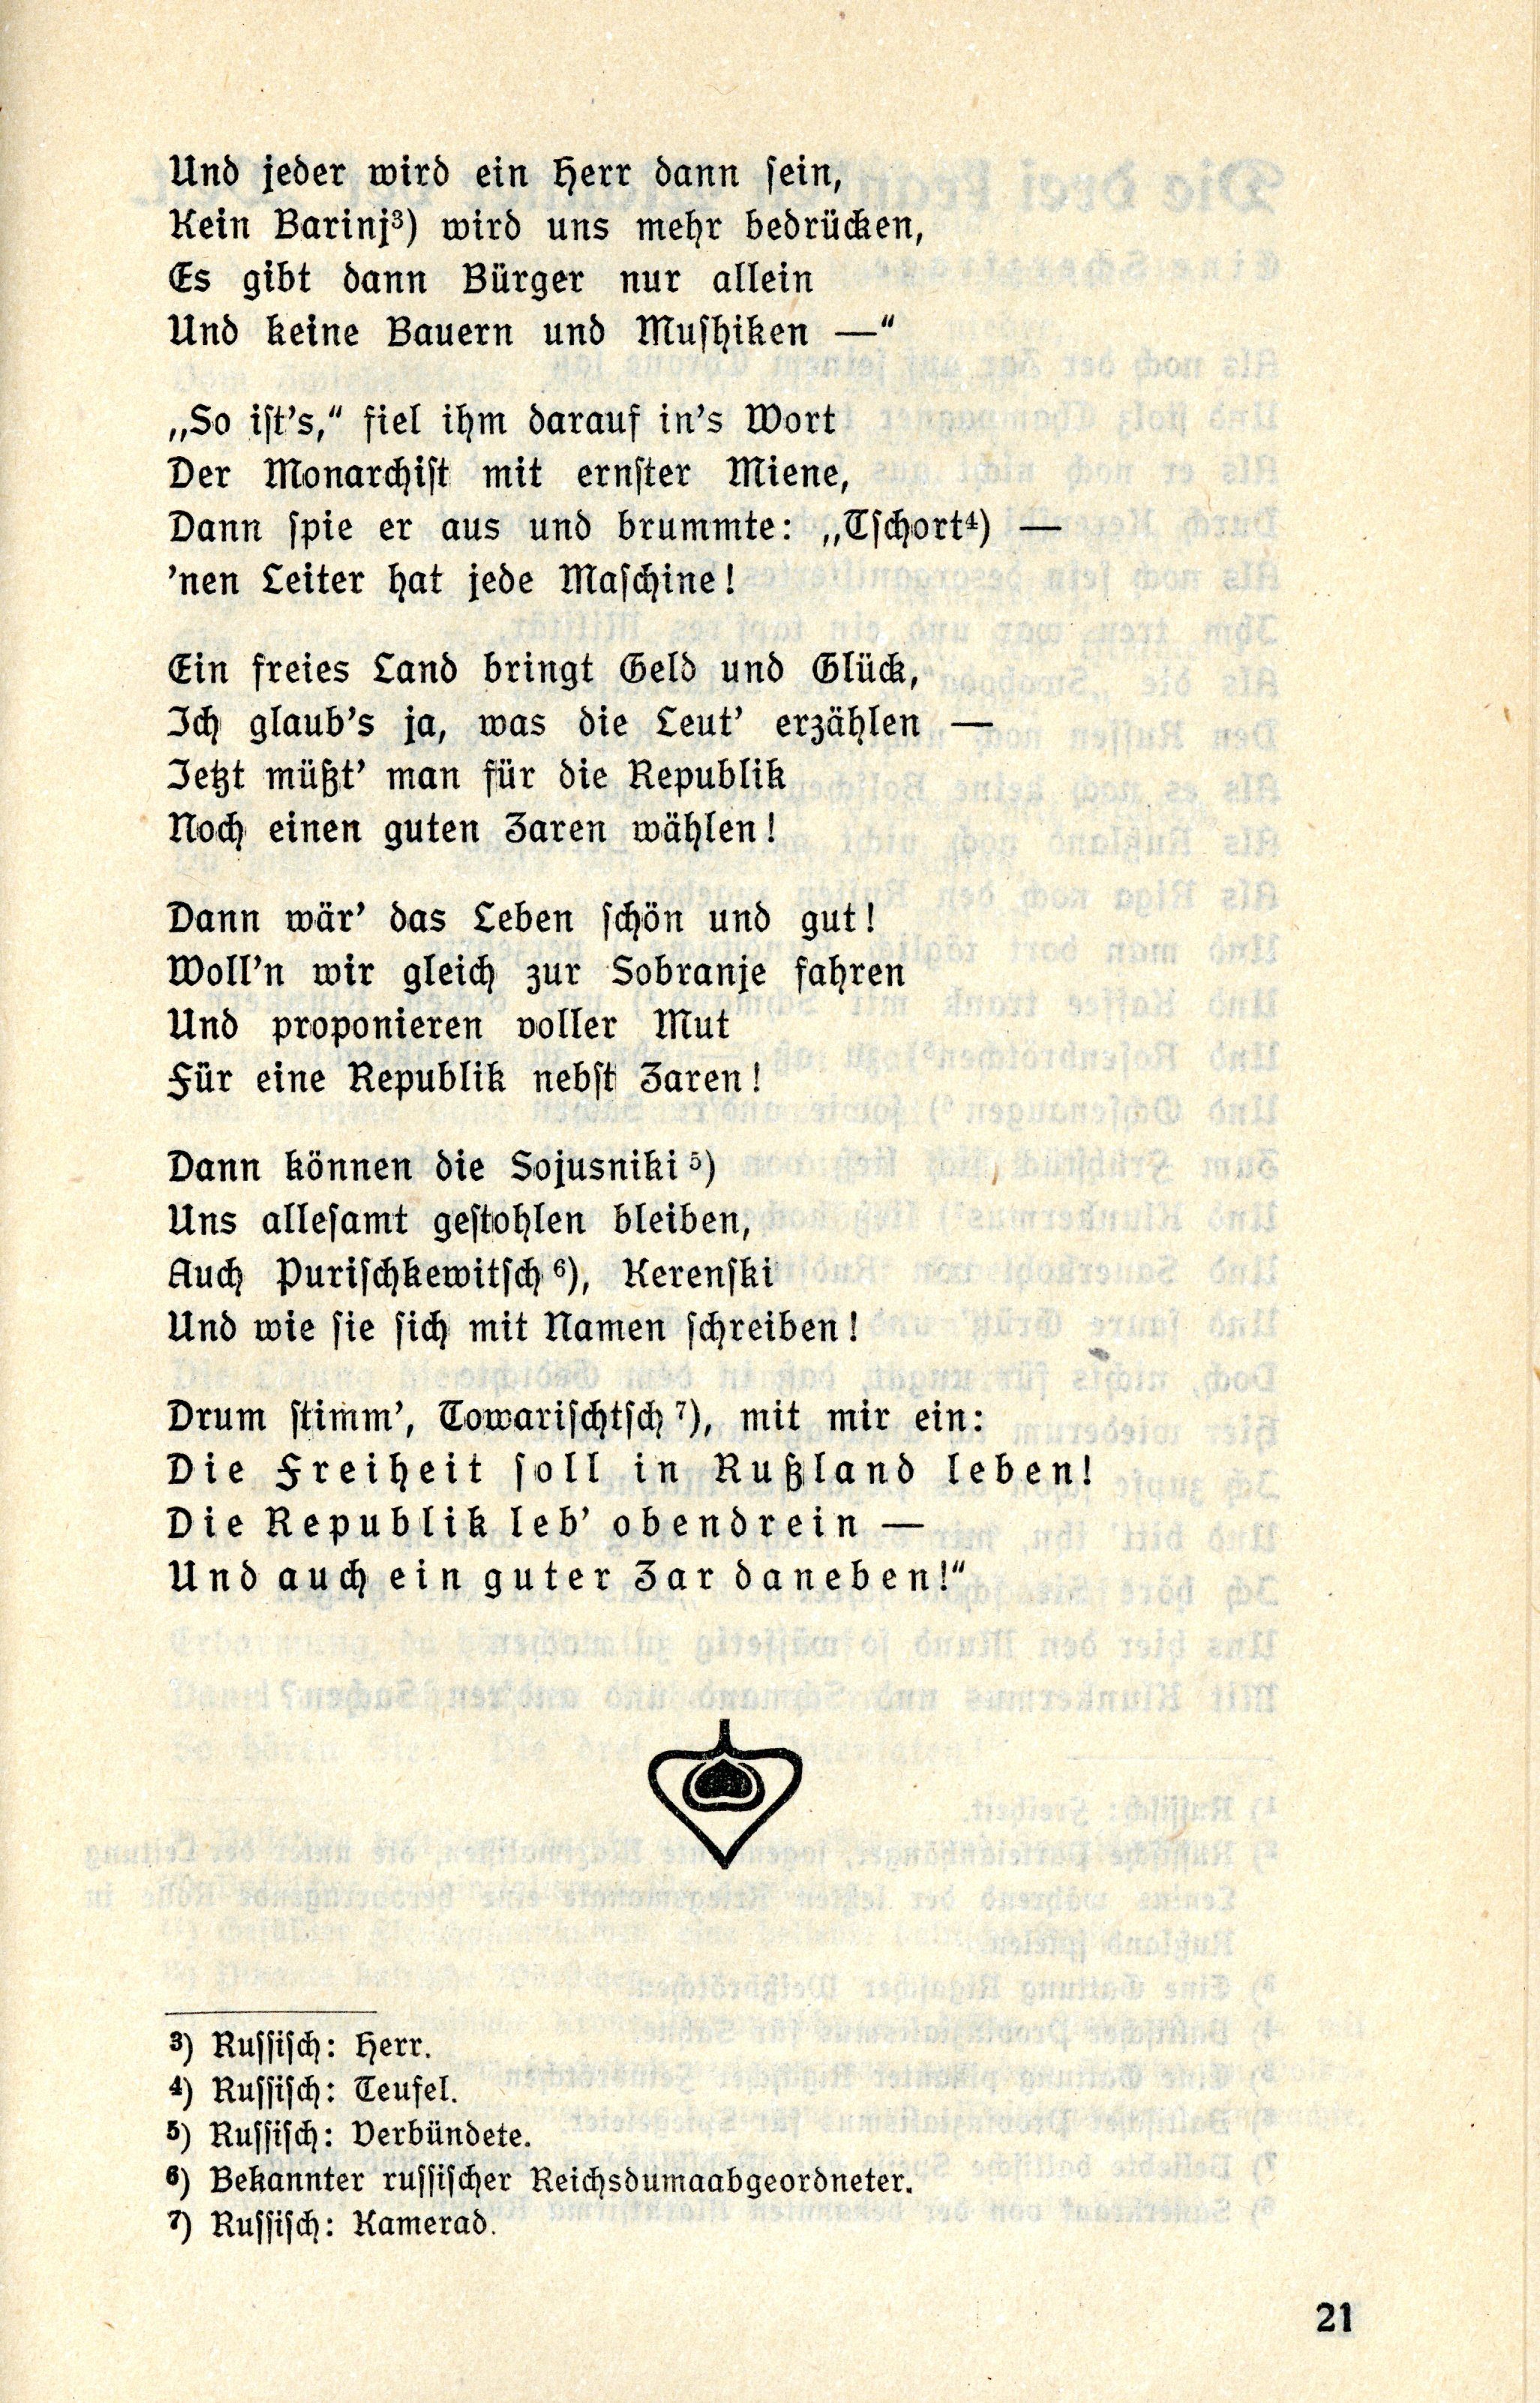 Der Balte im Maulkorb (1917) | 22. (21) Main body of text